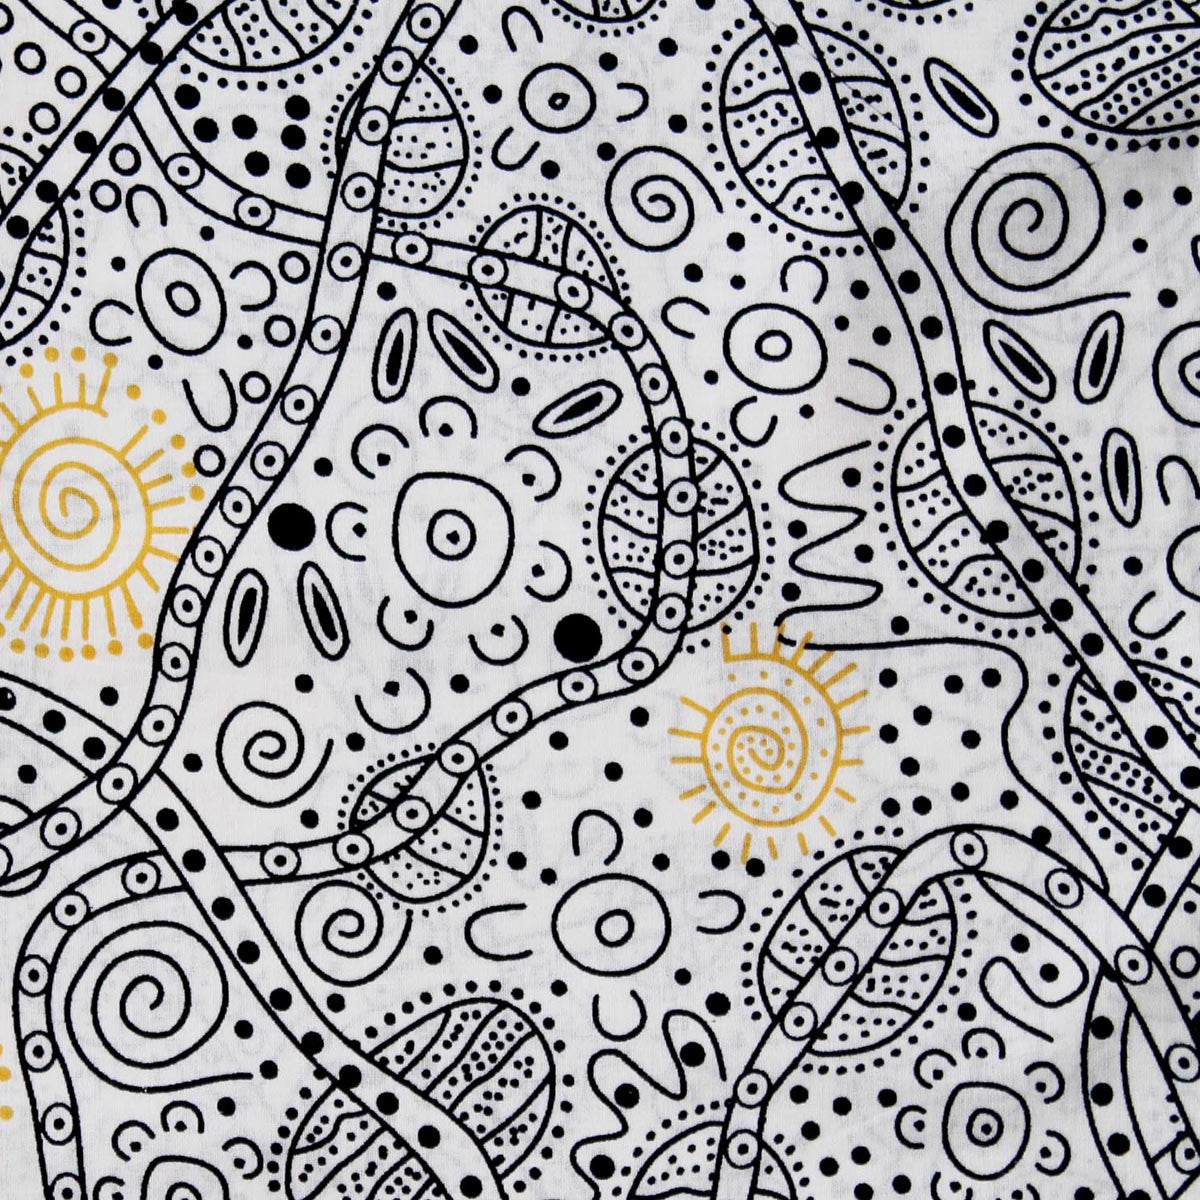 BUSH TUCKER WHITE by Aboriginal Artist JUNE SMITH